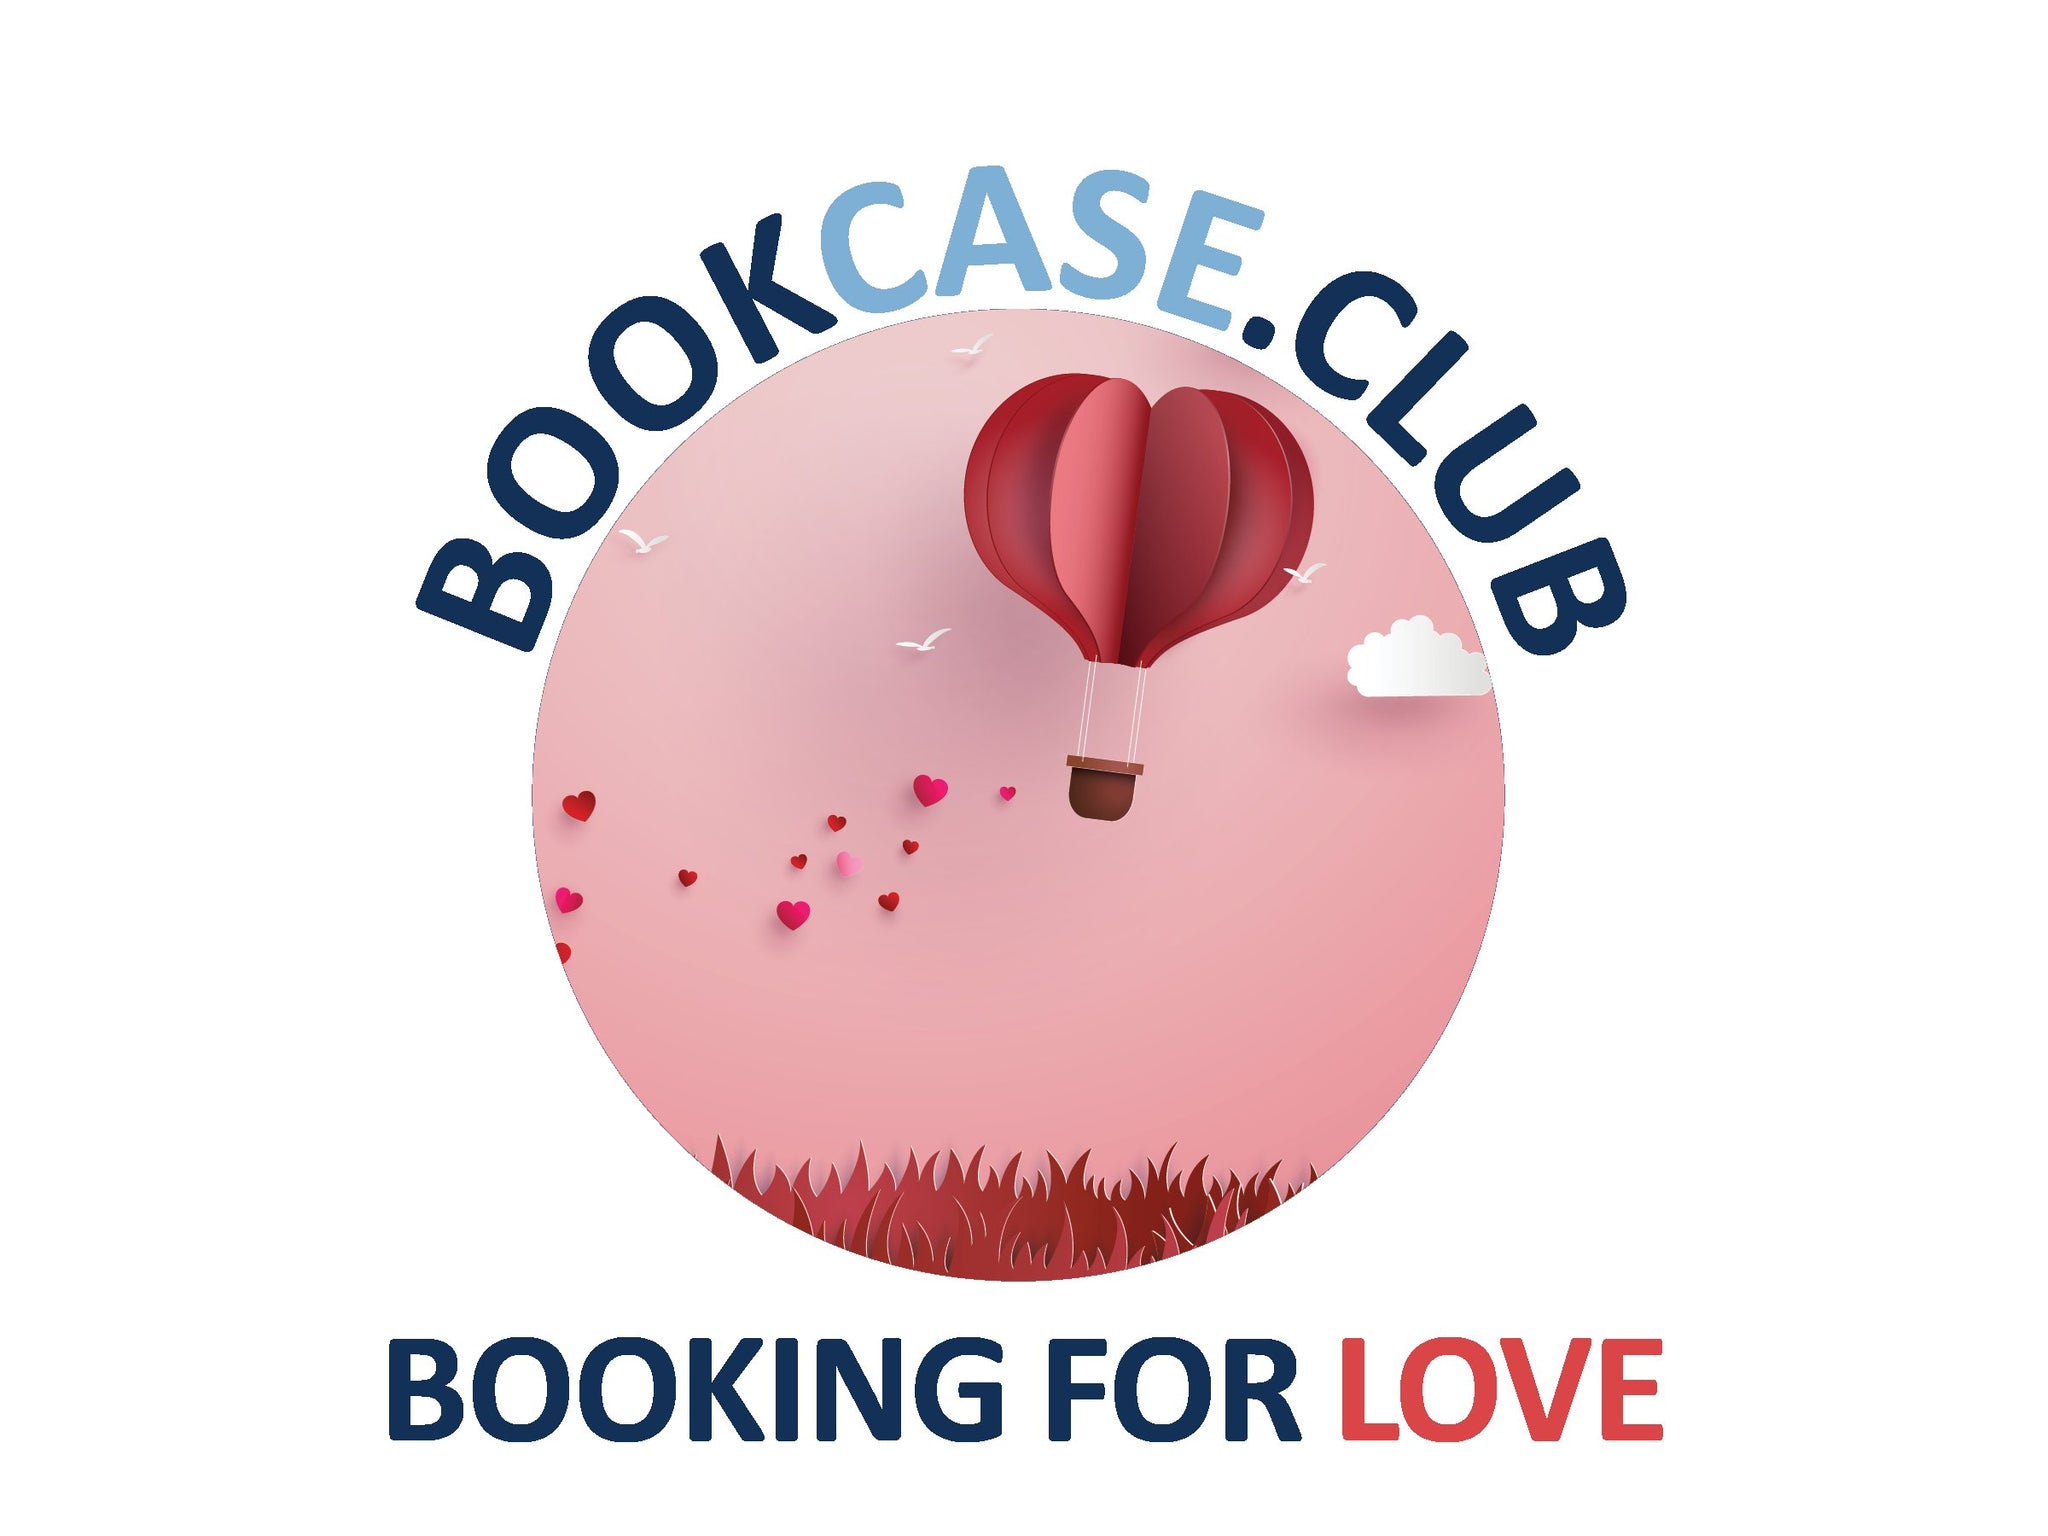 BookCase.Club booking for love romance book subscription box logo.